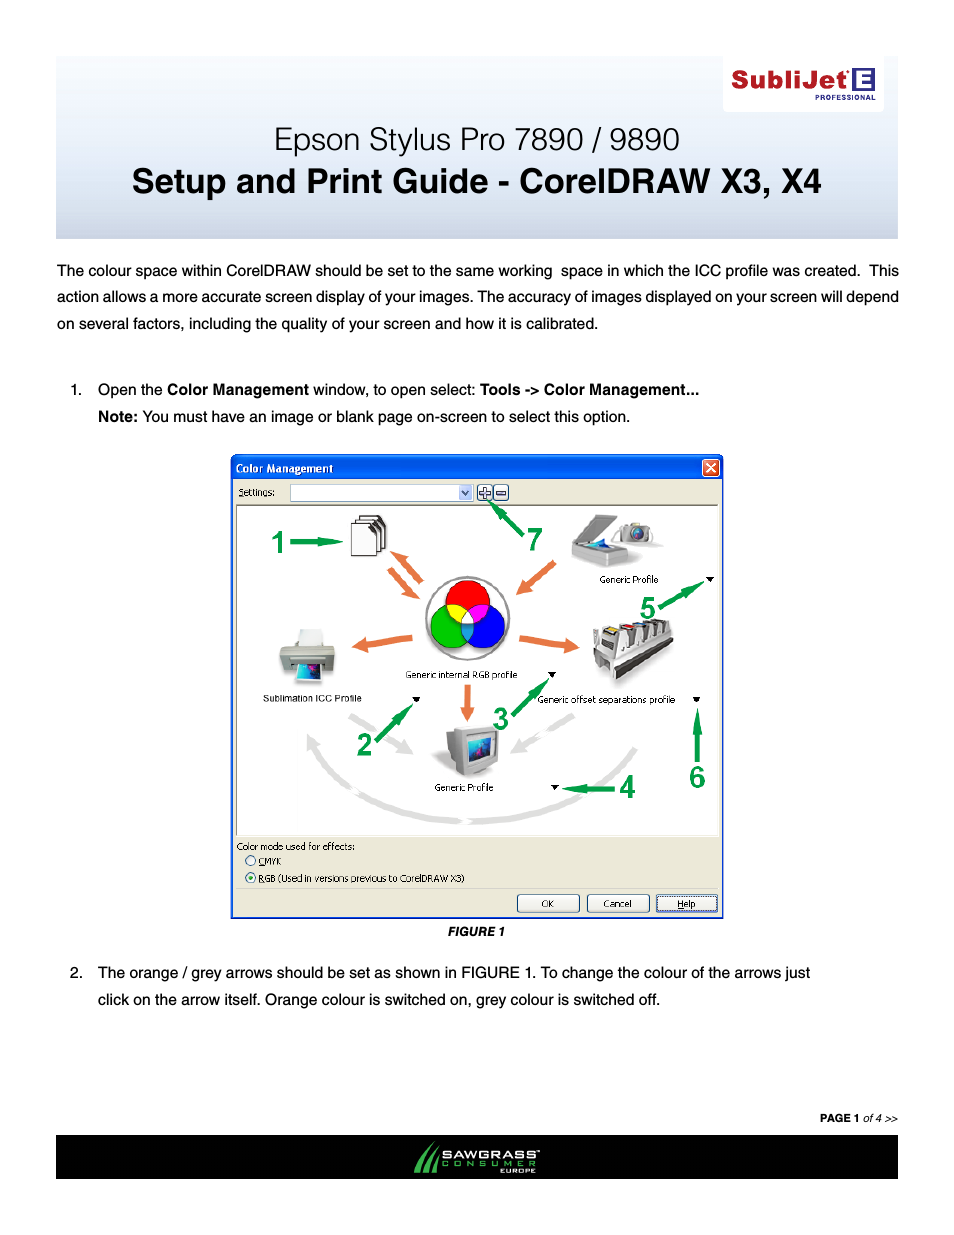 SubliJet E Epson Stylus Pro 7890 (Windows ICC Profile Setup): Print & Setup Guide CorelDRAW X3 - X4